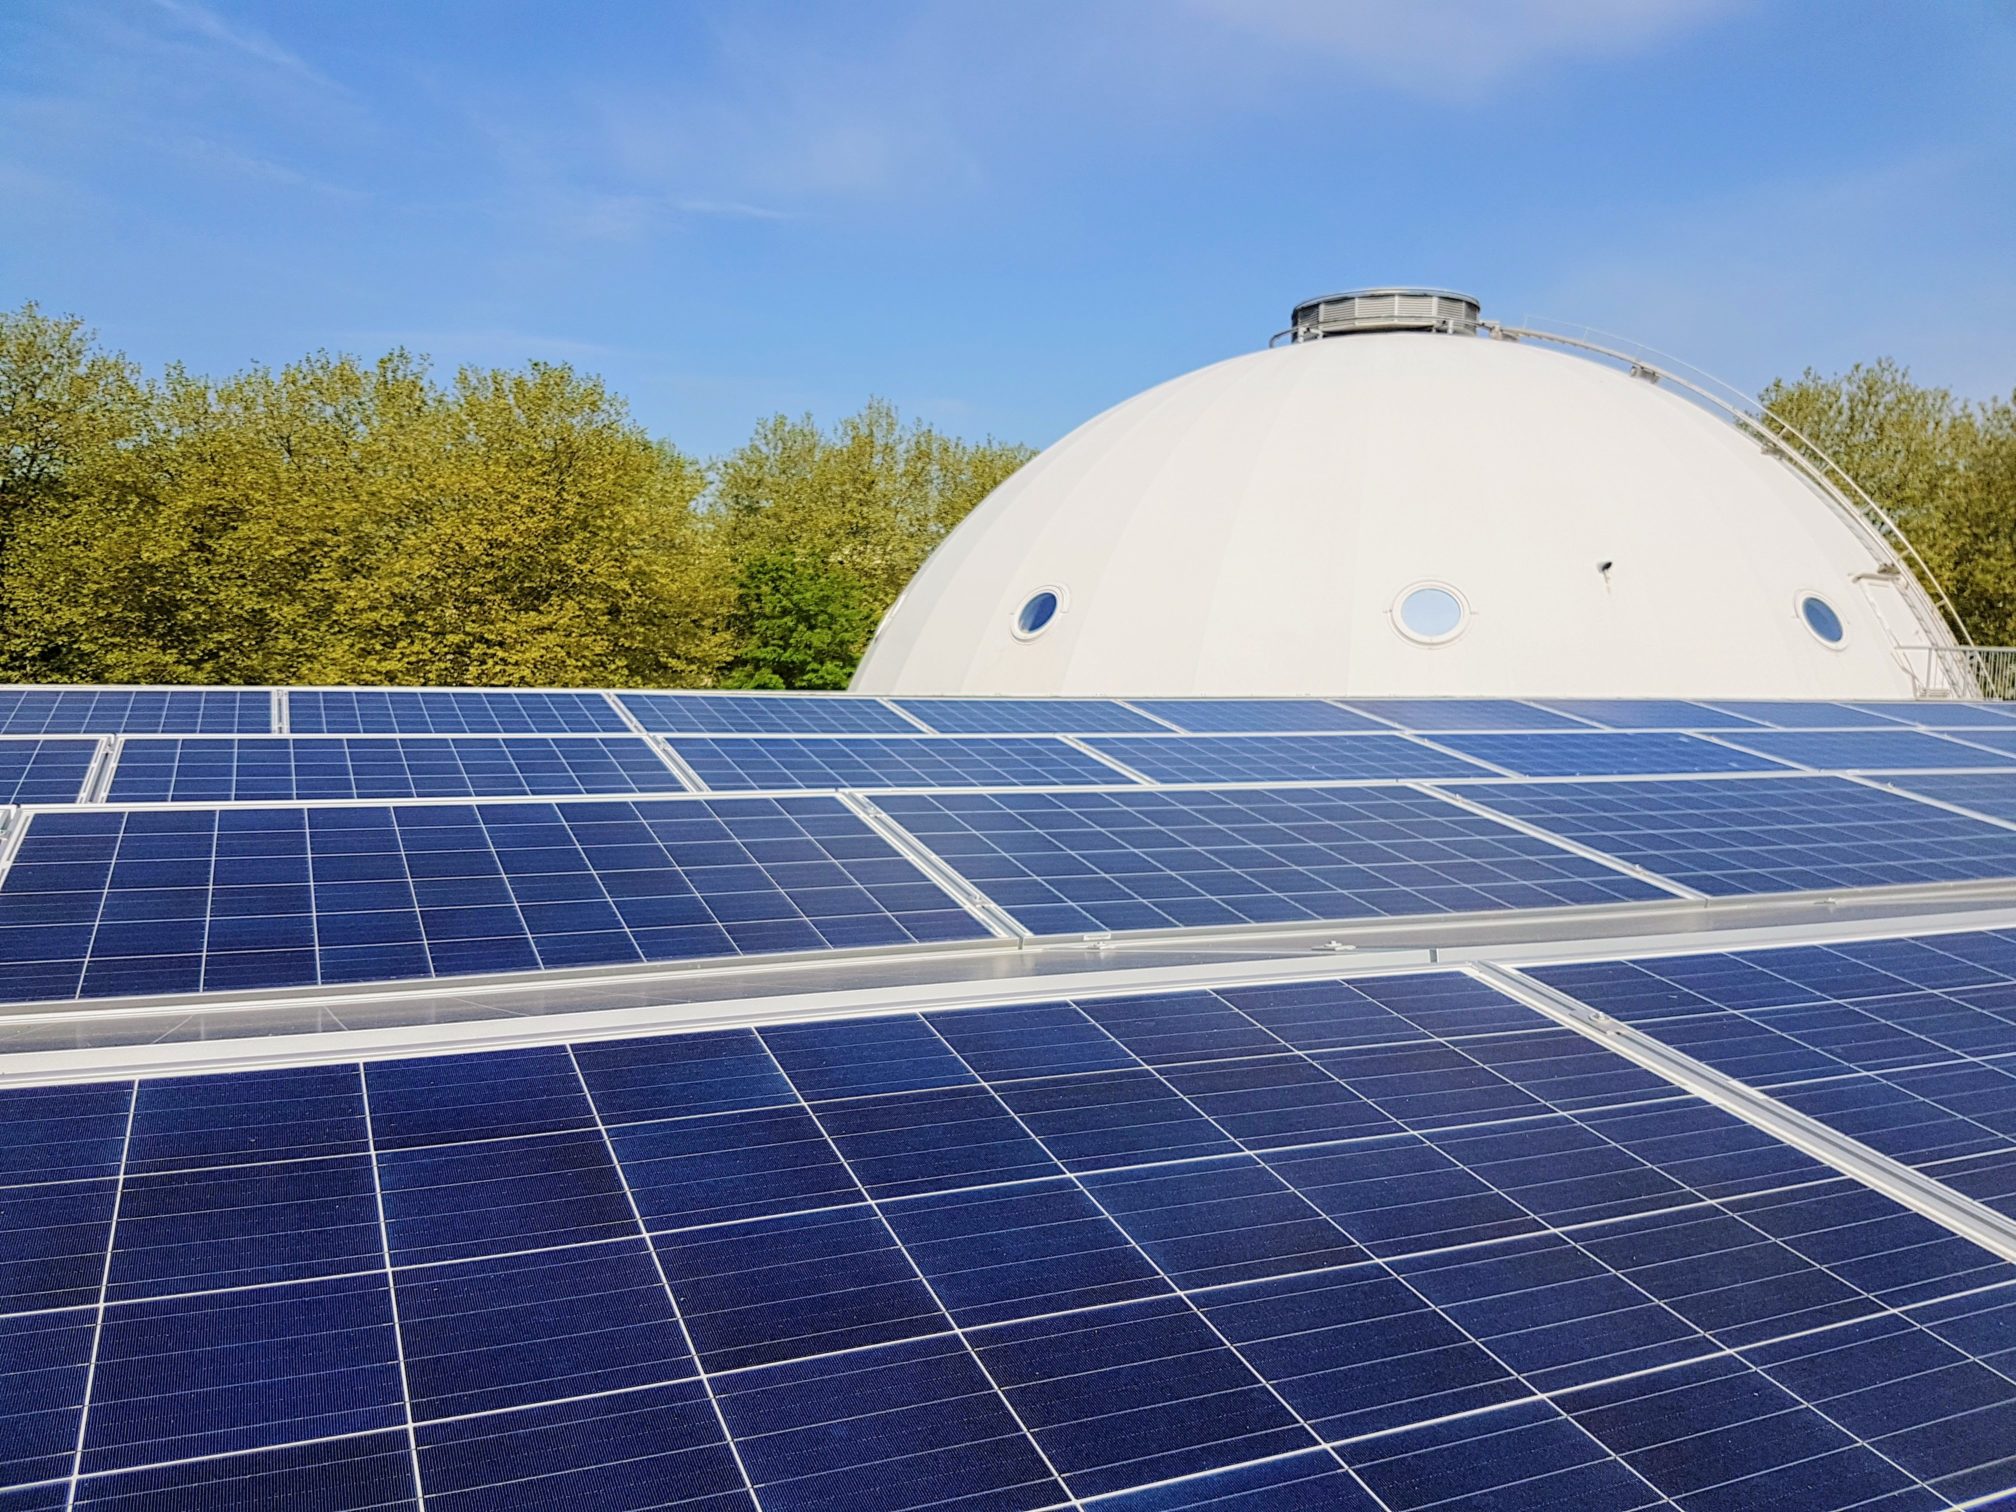 Zonnedak Planetarium - crowdfunding van zonne-energie